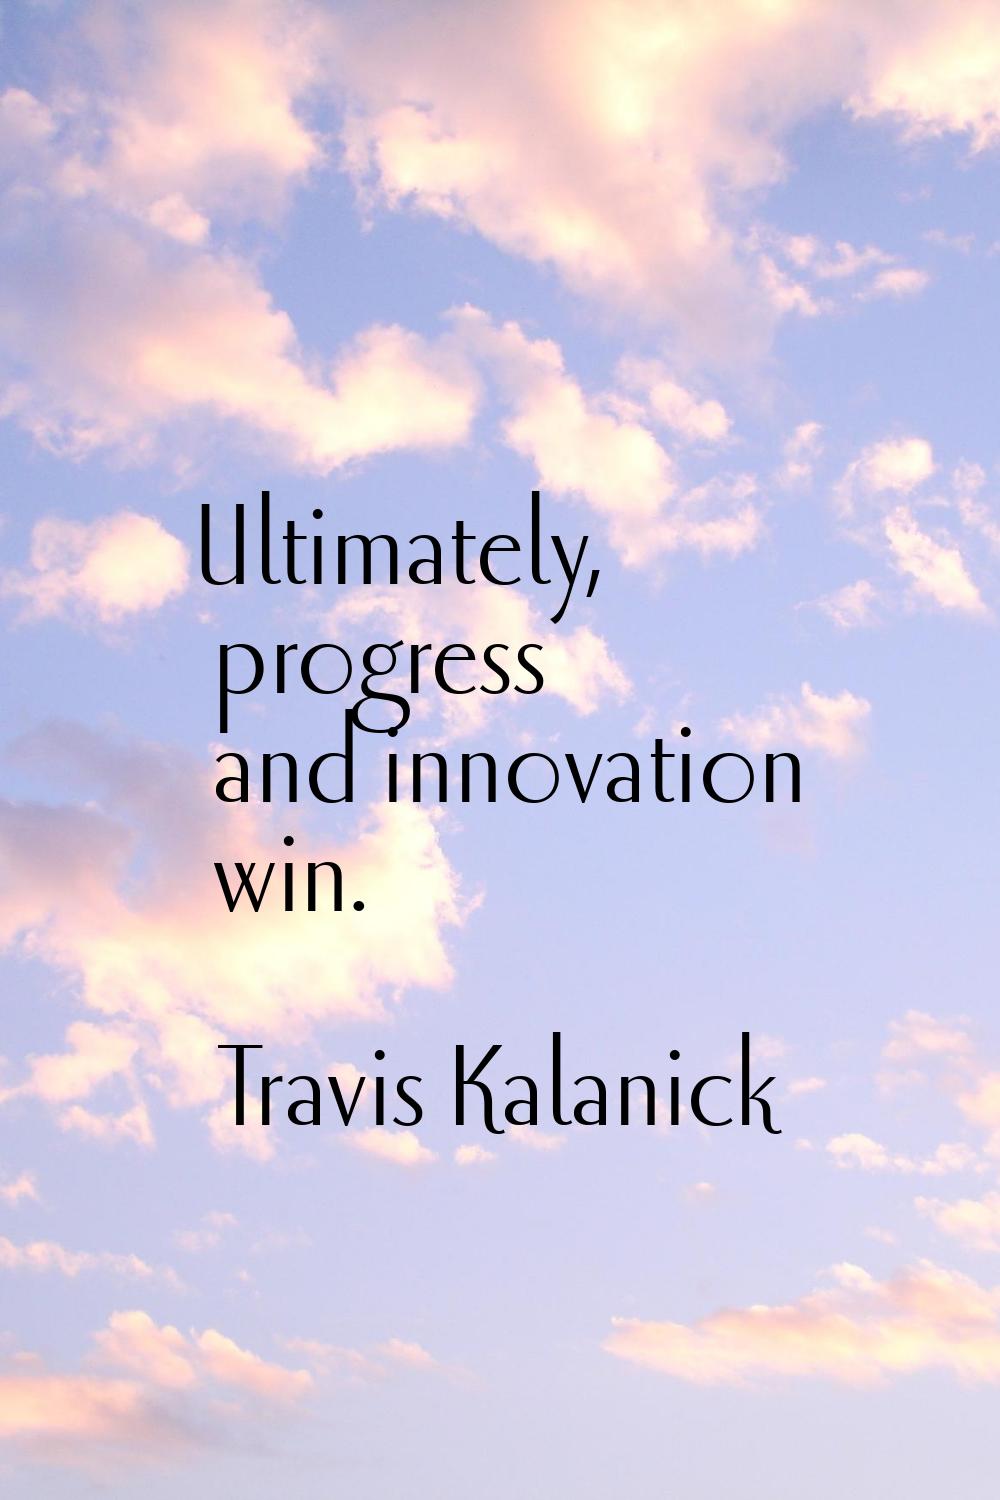 Ultimately, progress and innovation win.